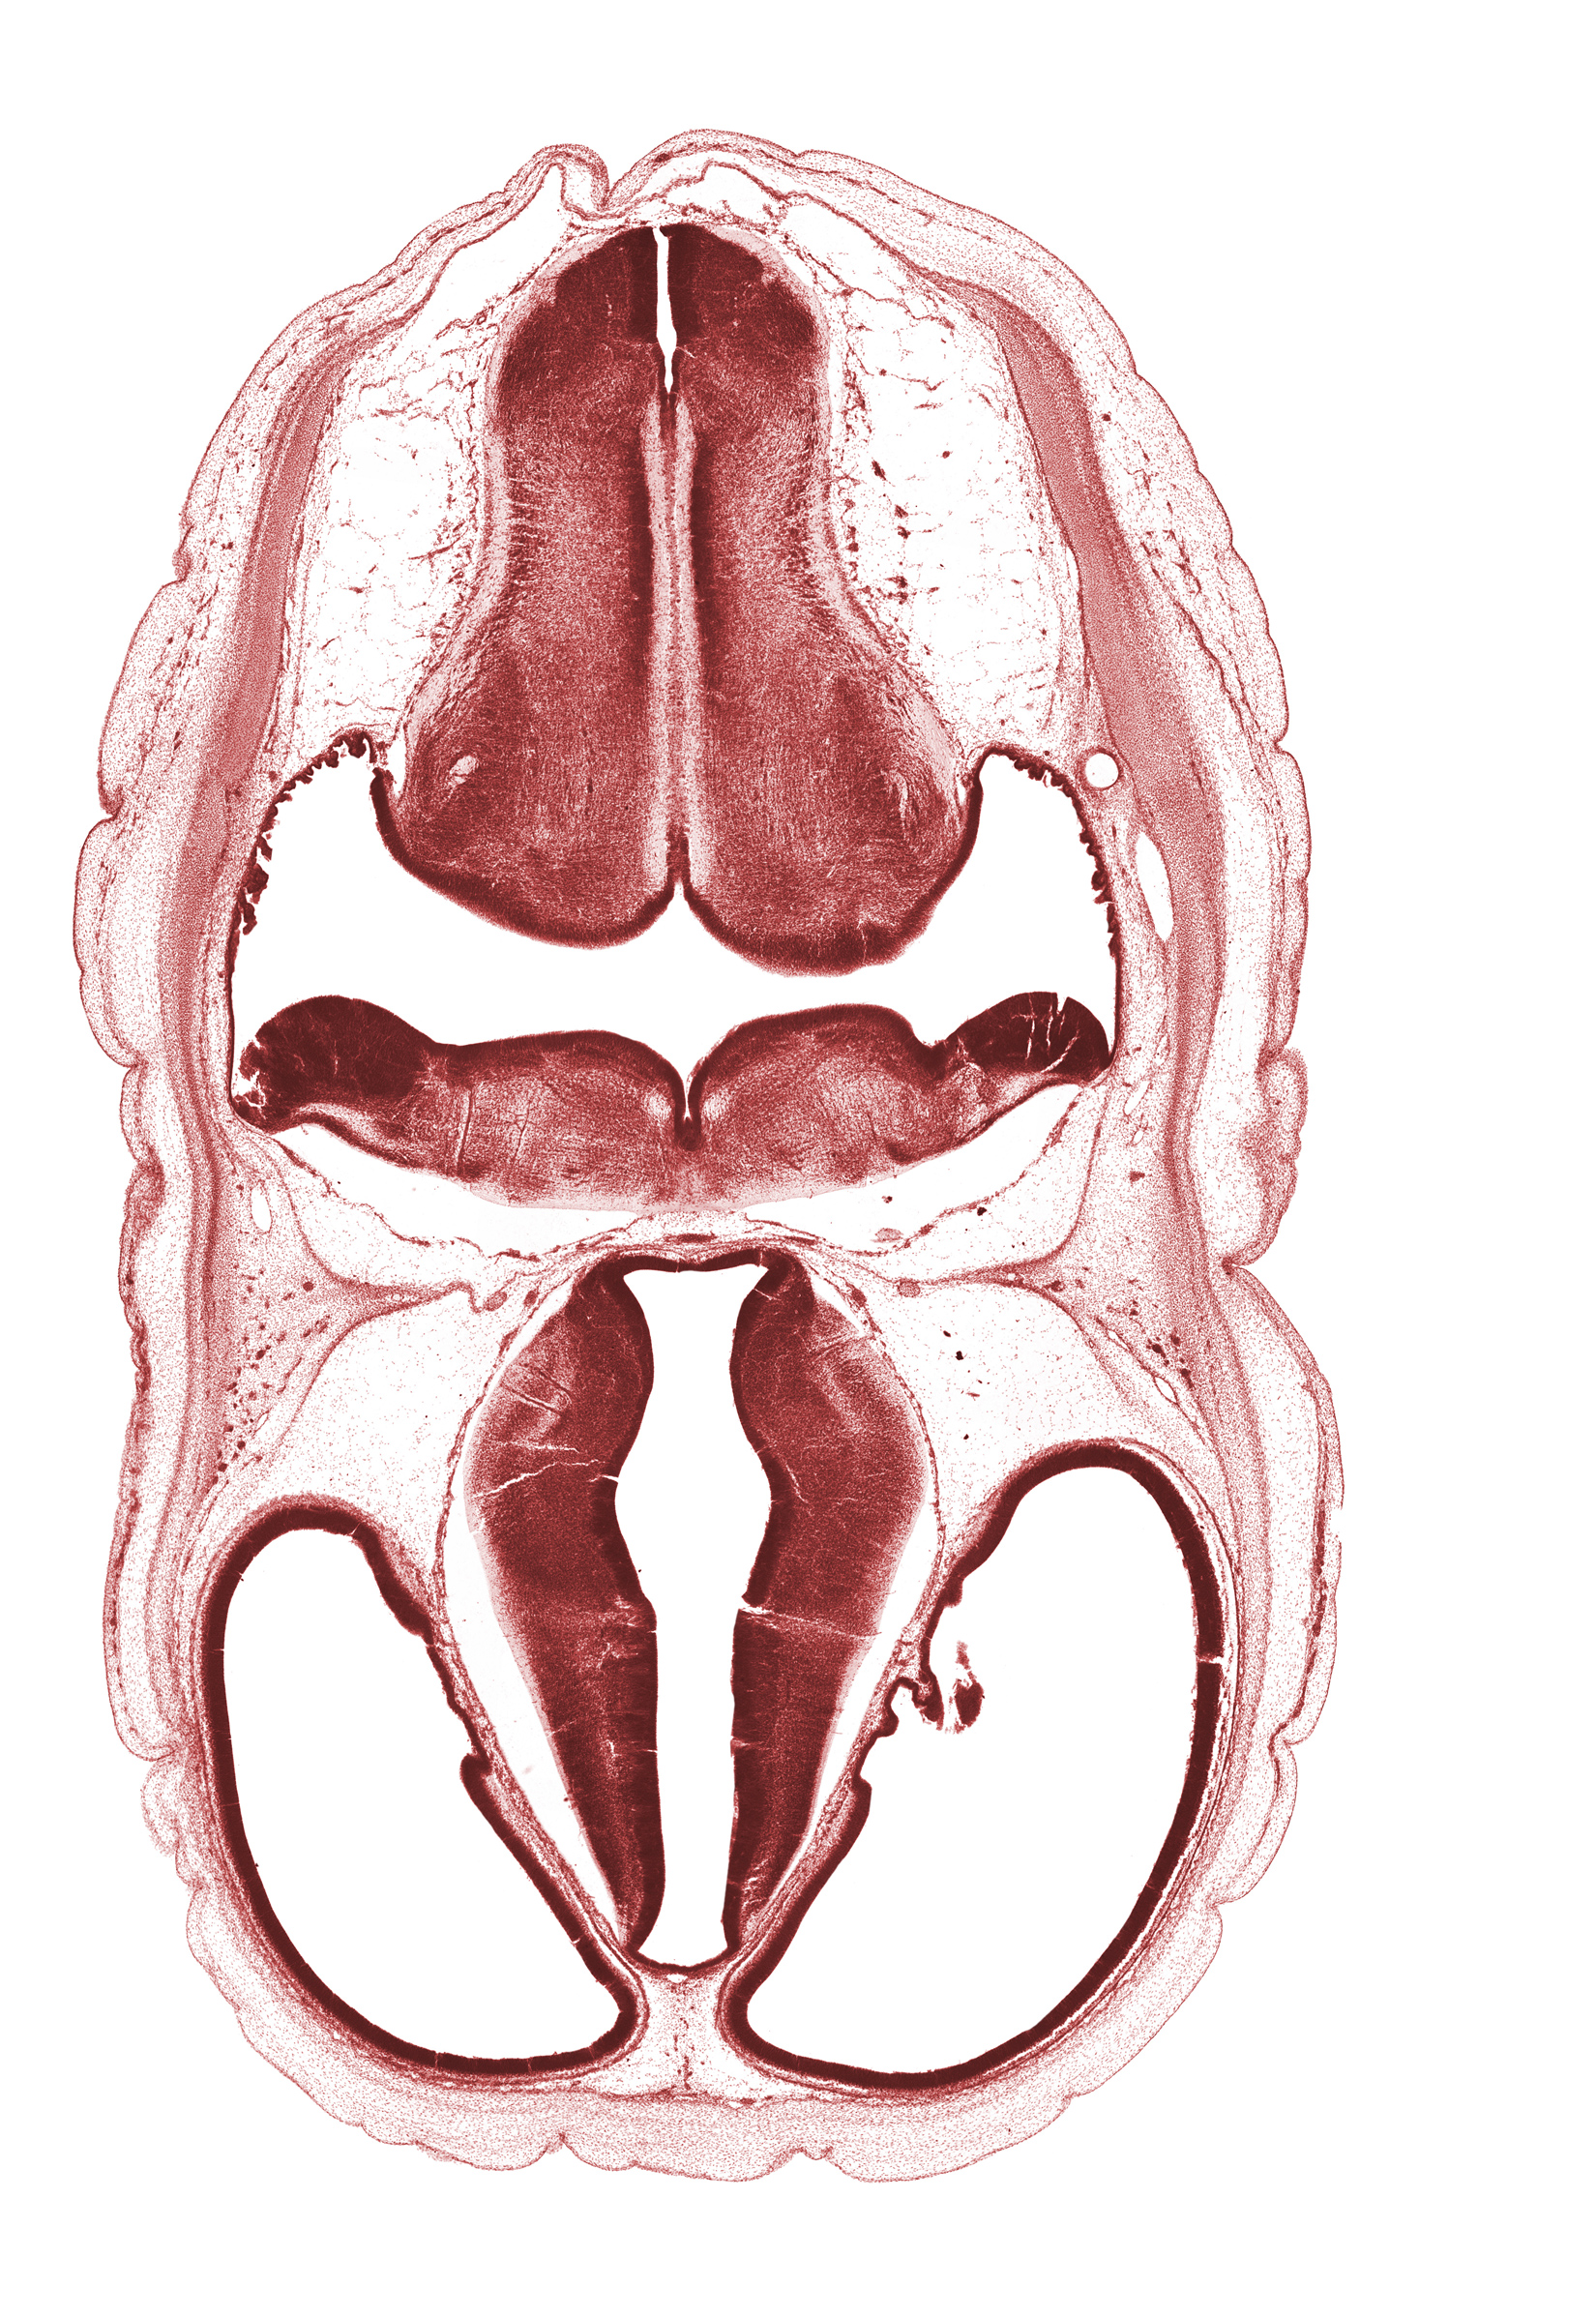 basilar artery, central canal of myelencephalon, cerebral vesicle (hemisphere), decussation, dorsal thalamus, endolymphatic sac, exoccipital, fiber tract, hypothalamus, intermediate zone, lateral ventricle, marginal zone, median sulcus, posterior communicating artery, posterior dural venous plexus, roof plate, third ventricle, ventral thalamus, ventricular zone